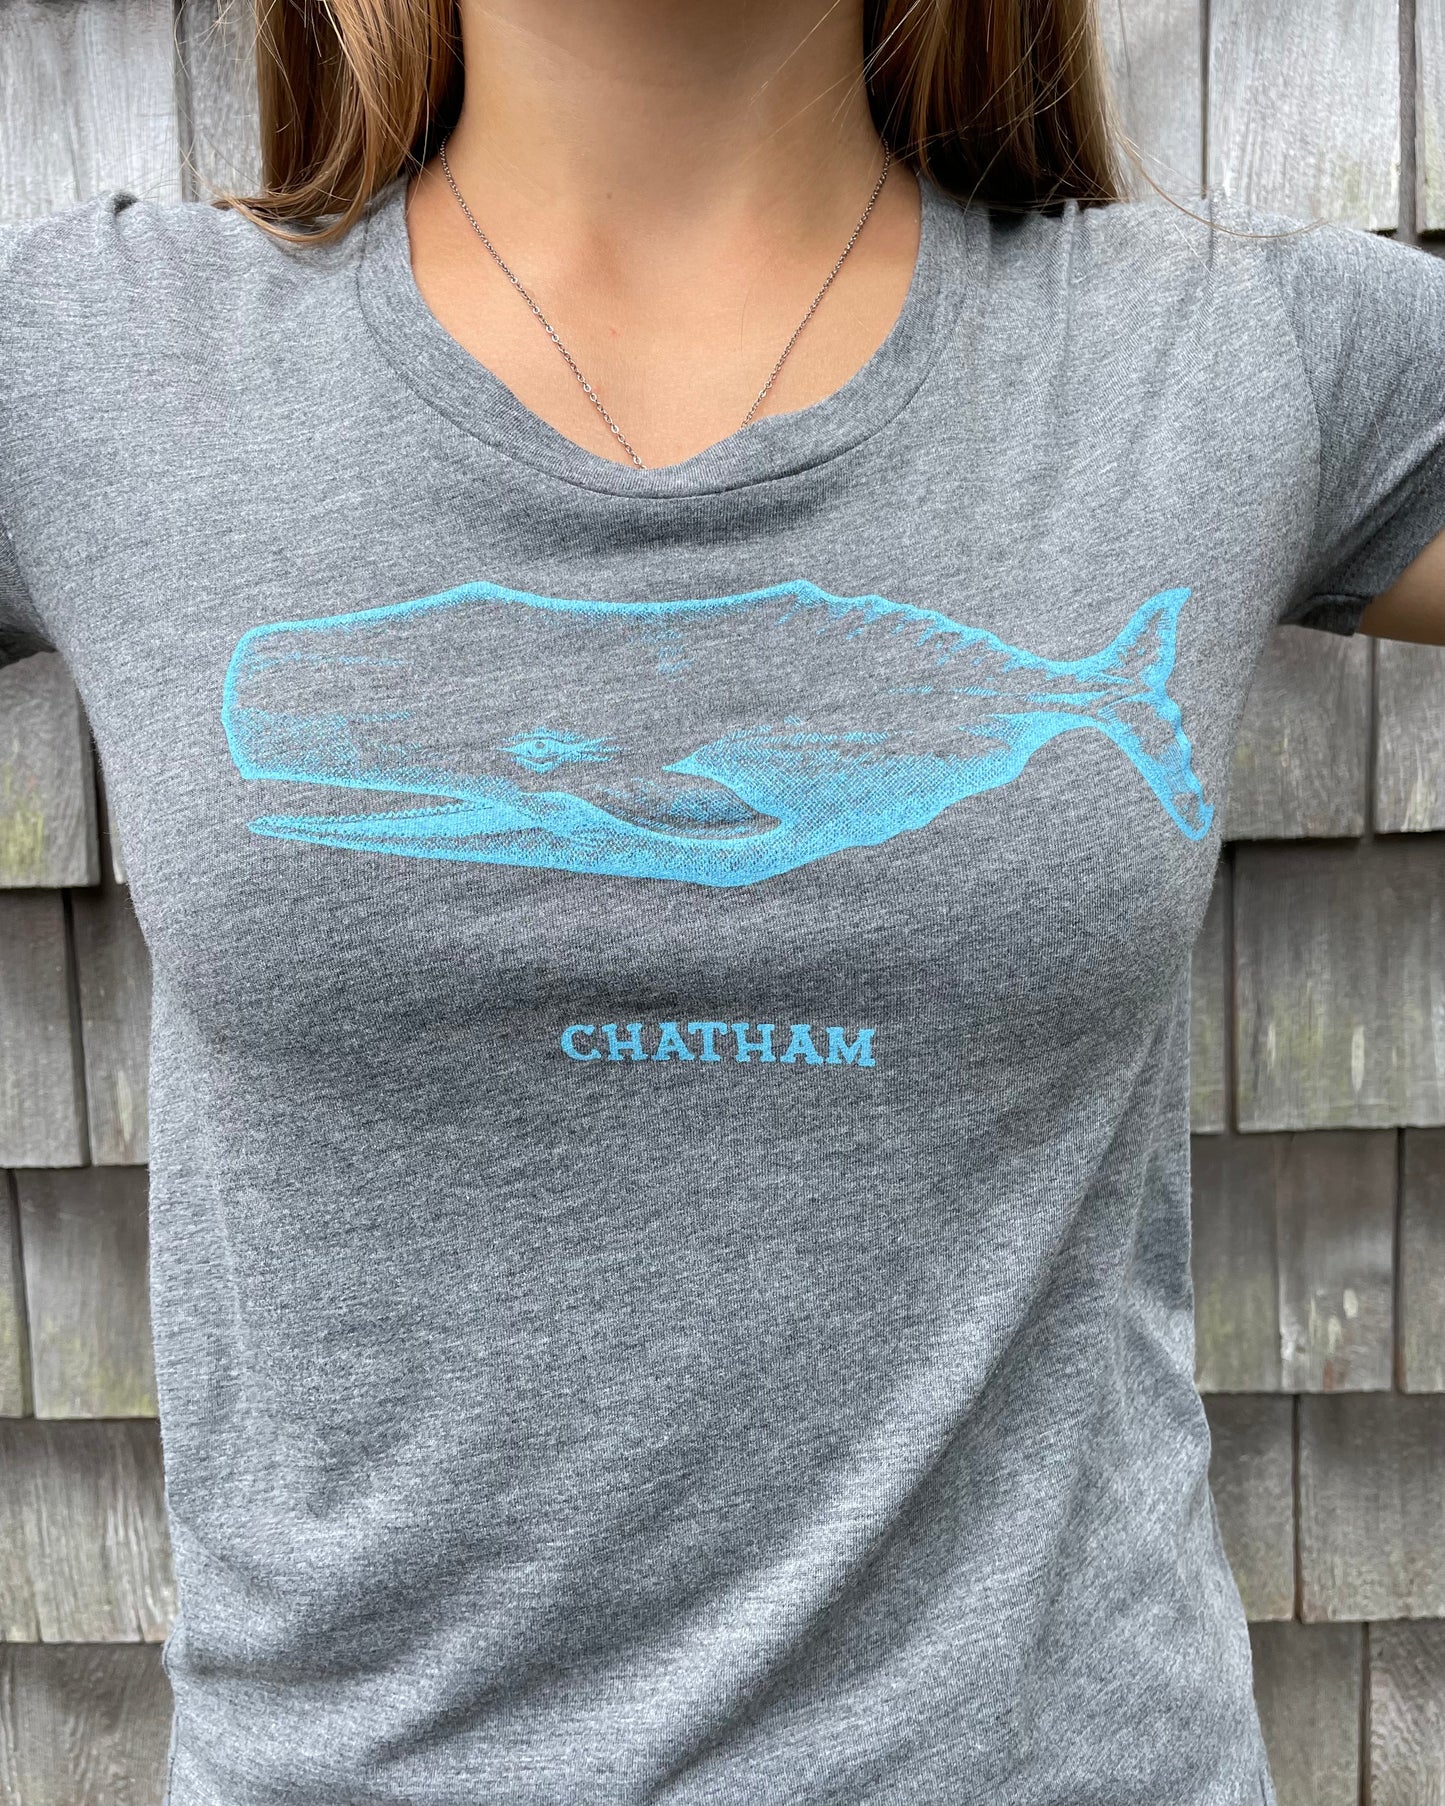 Chatham Whale Tee